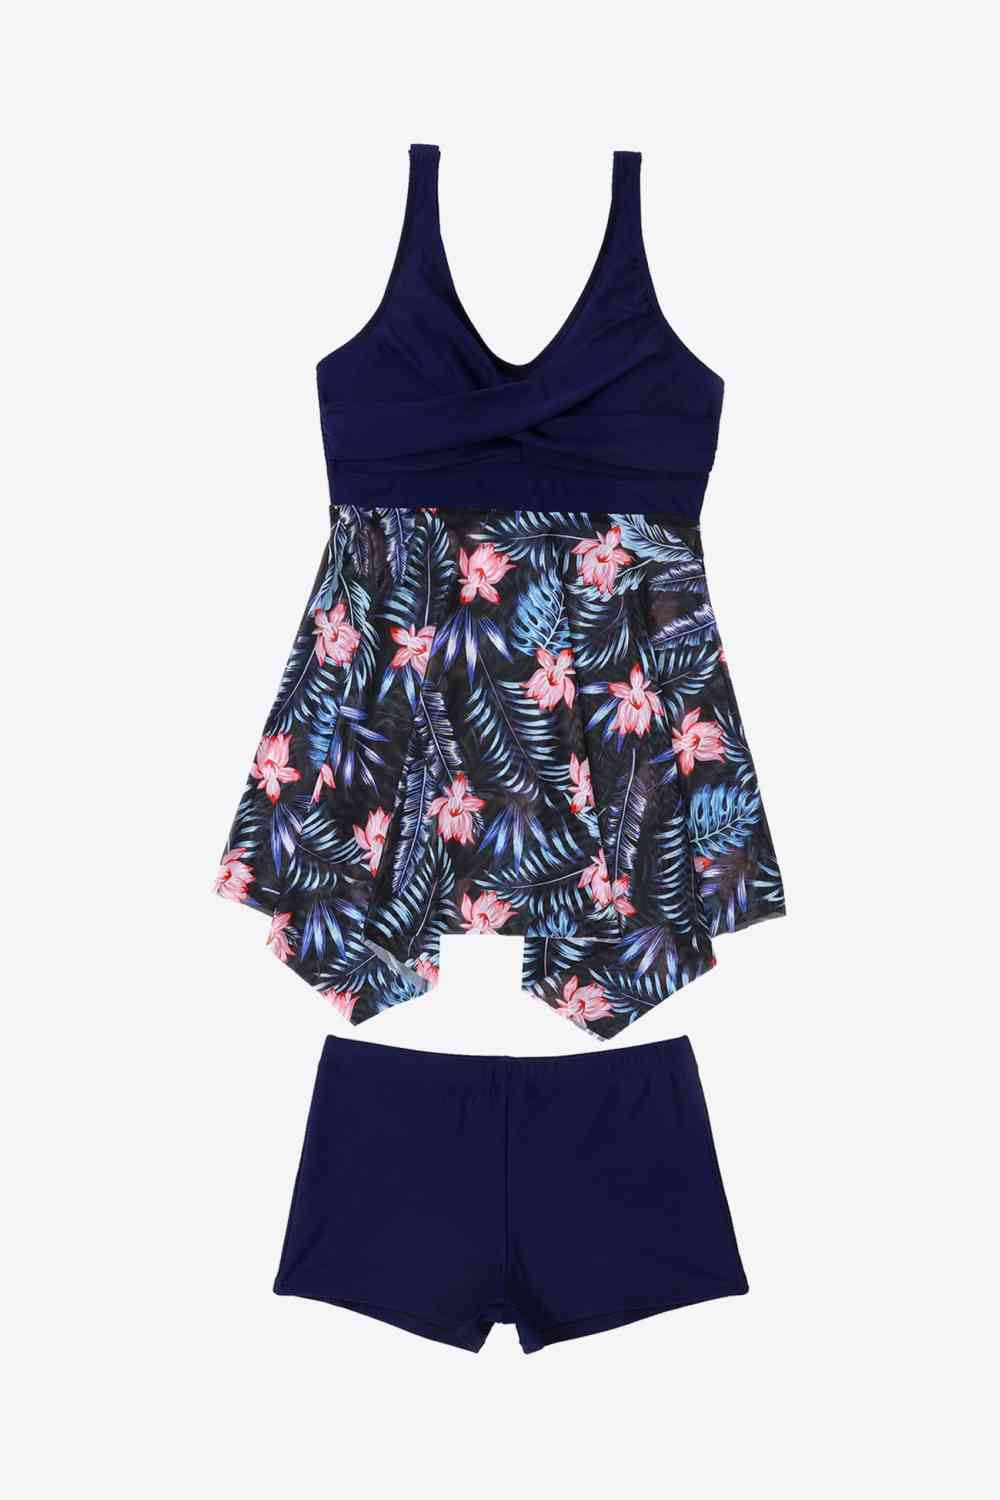 FleekGoddess Plus Size Floral Two-Tone Asymmetrical Hem Two-Piece Swimsuit - FleekGoddess